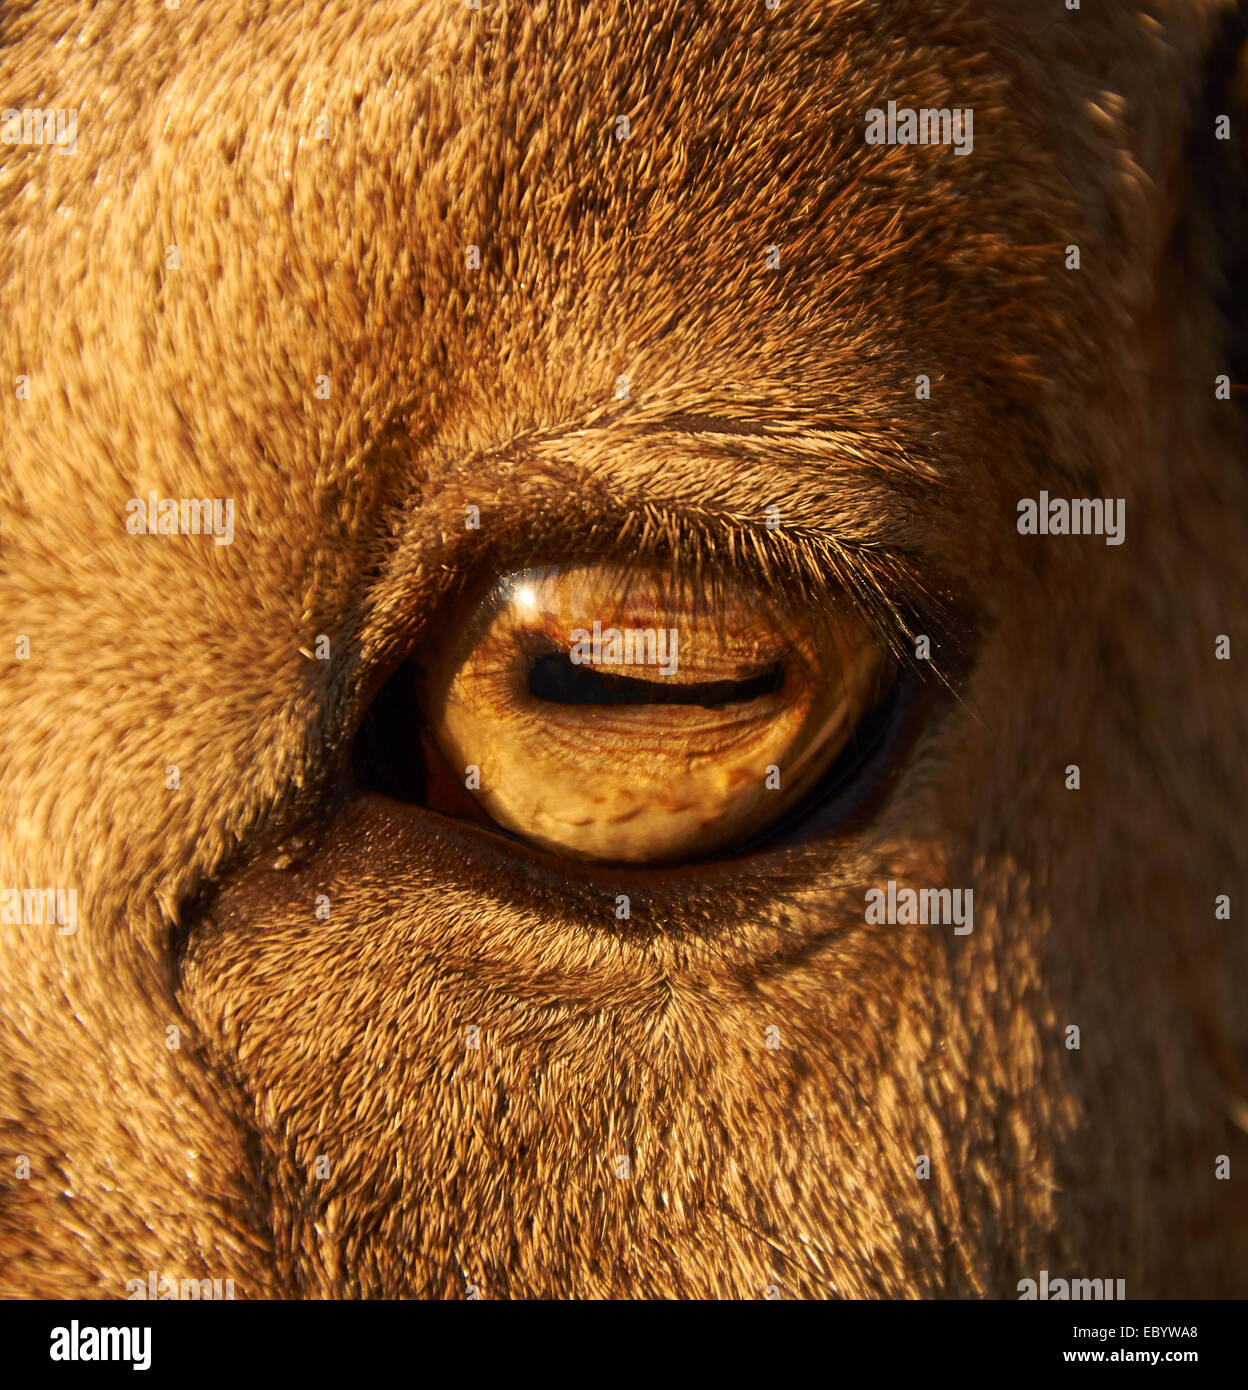 close-up photo of adult male sheep eye Stock Photo